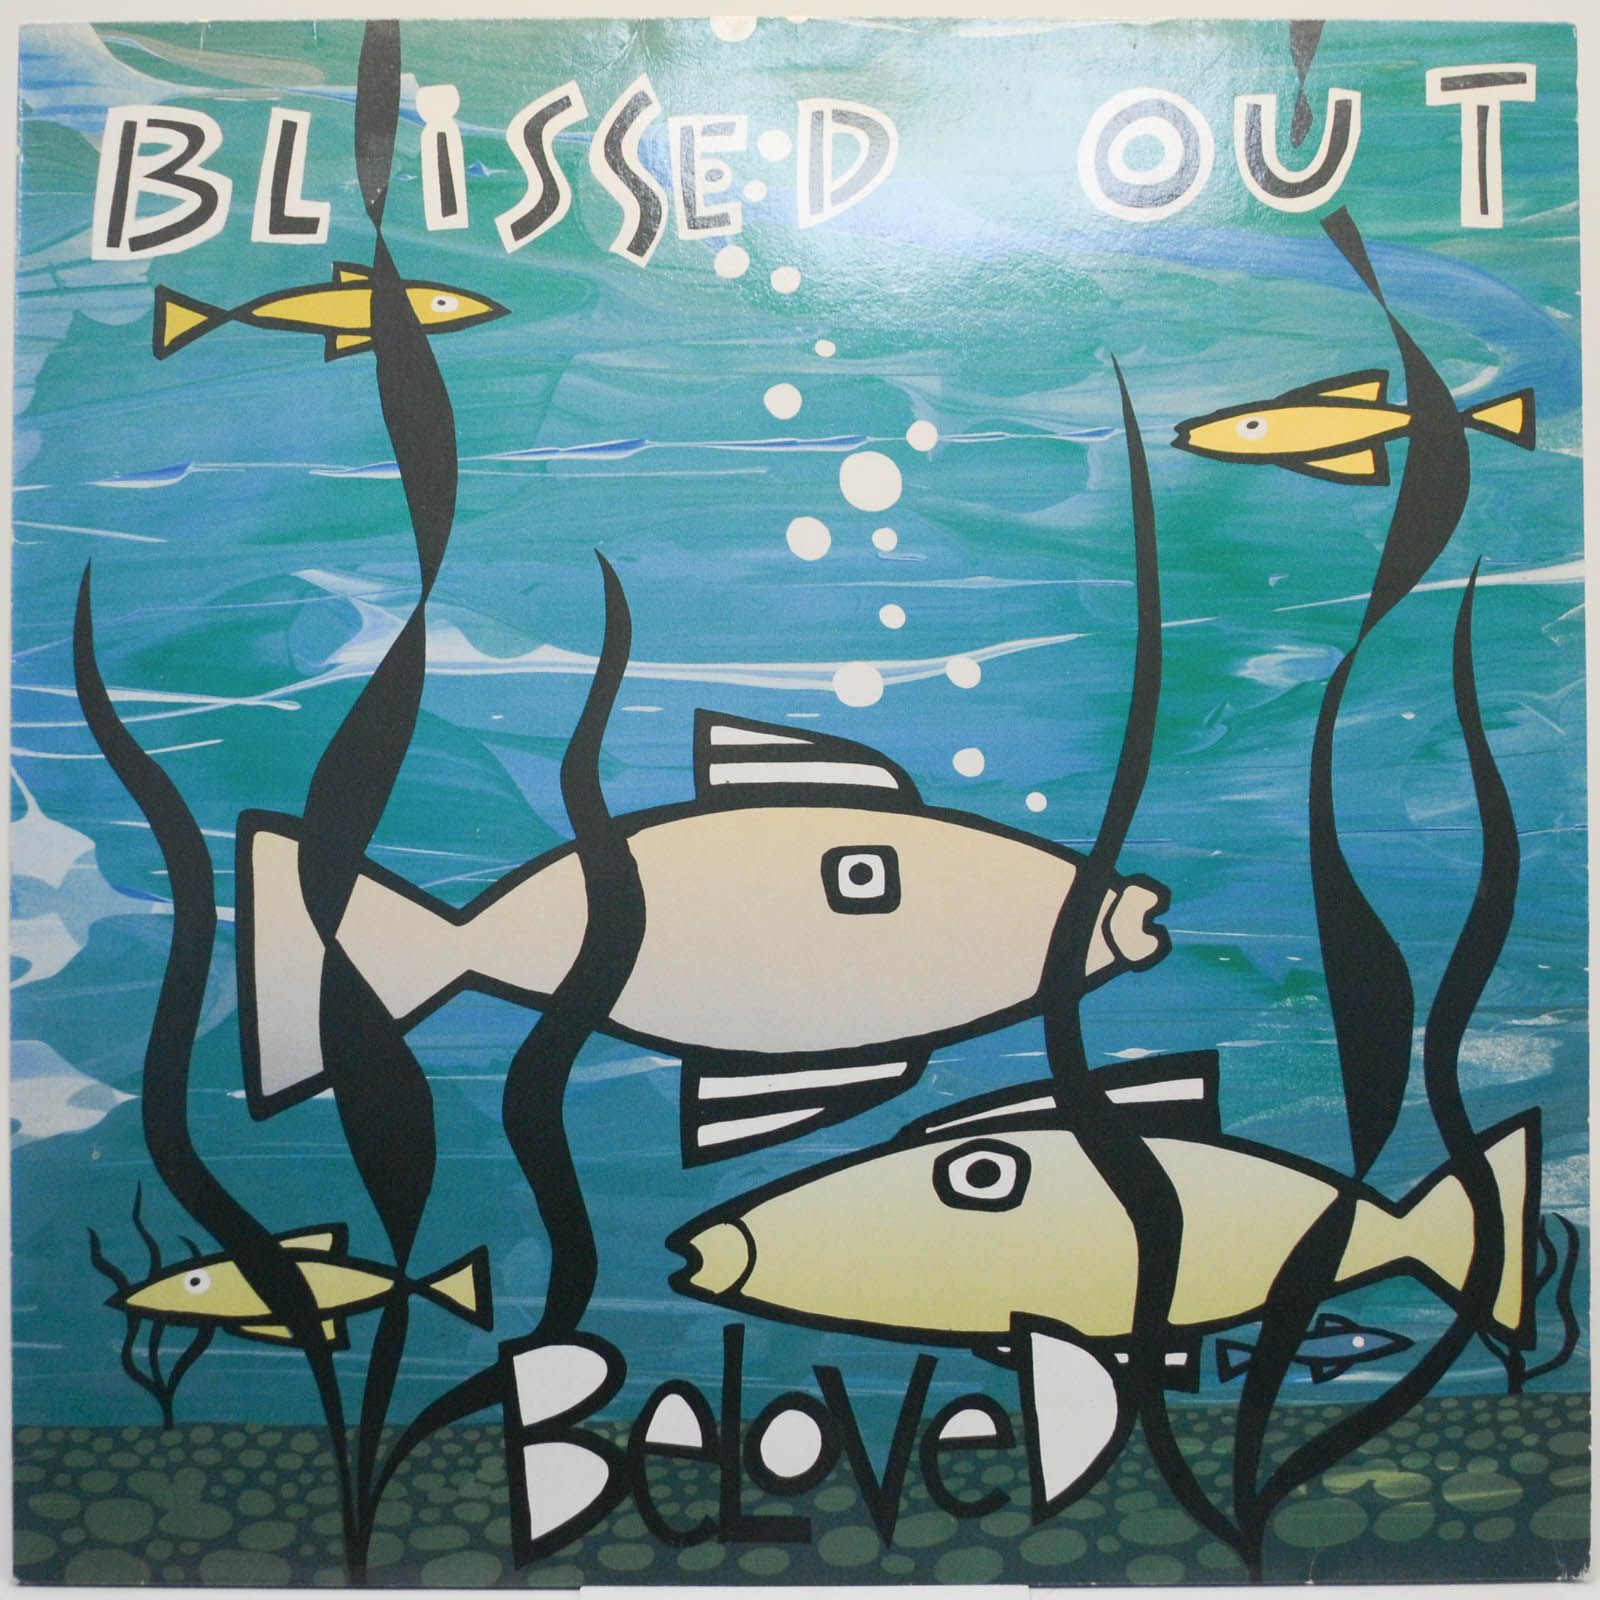 Beloved — Blissed Out, 1990